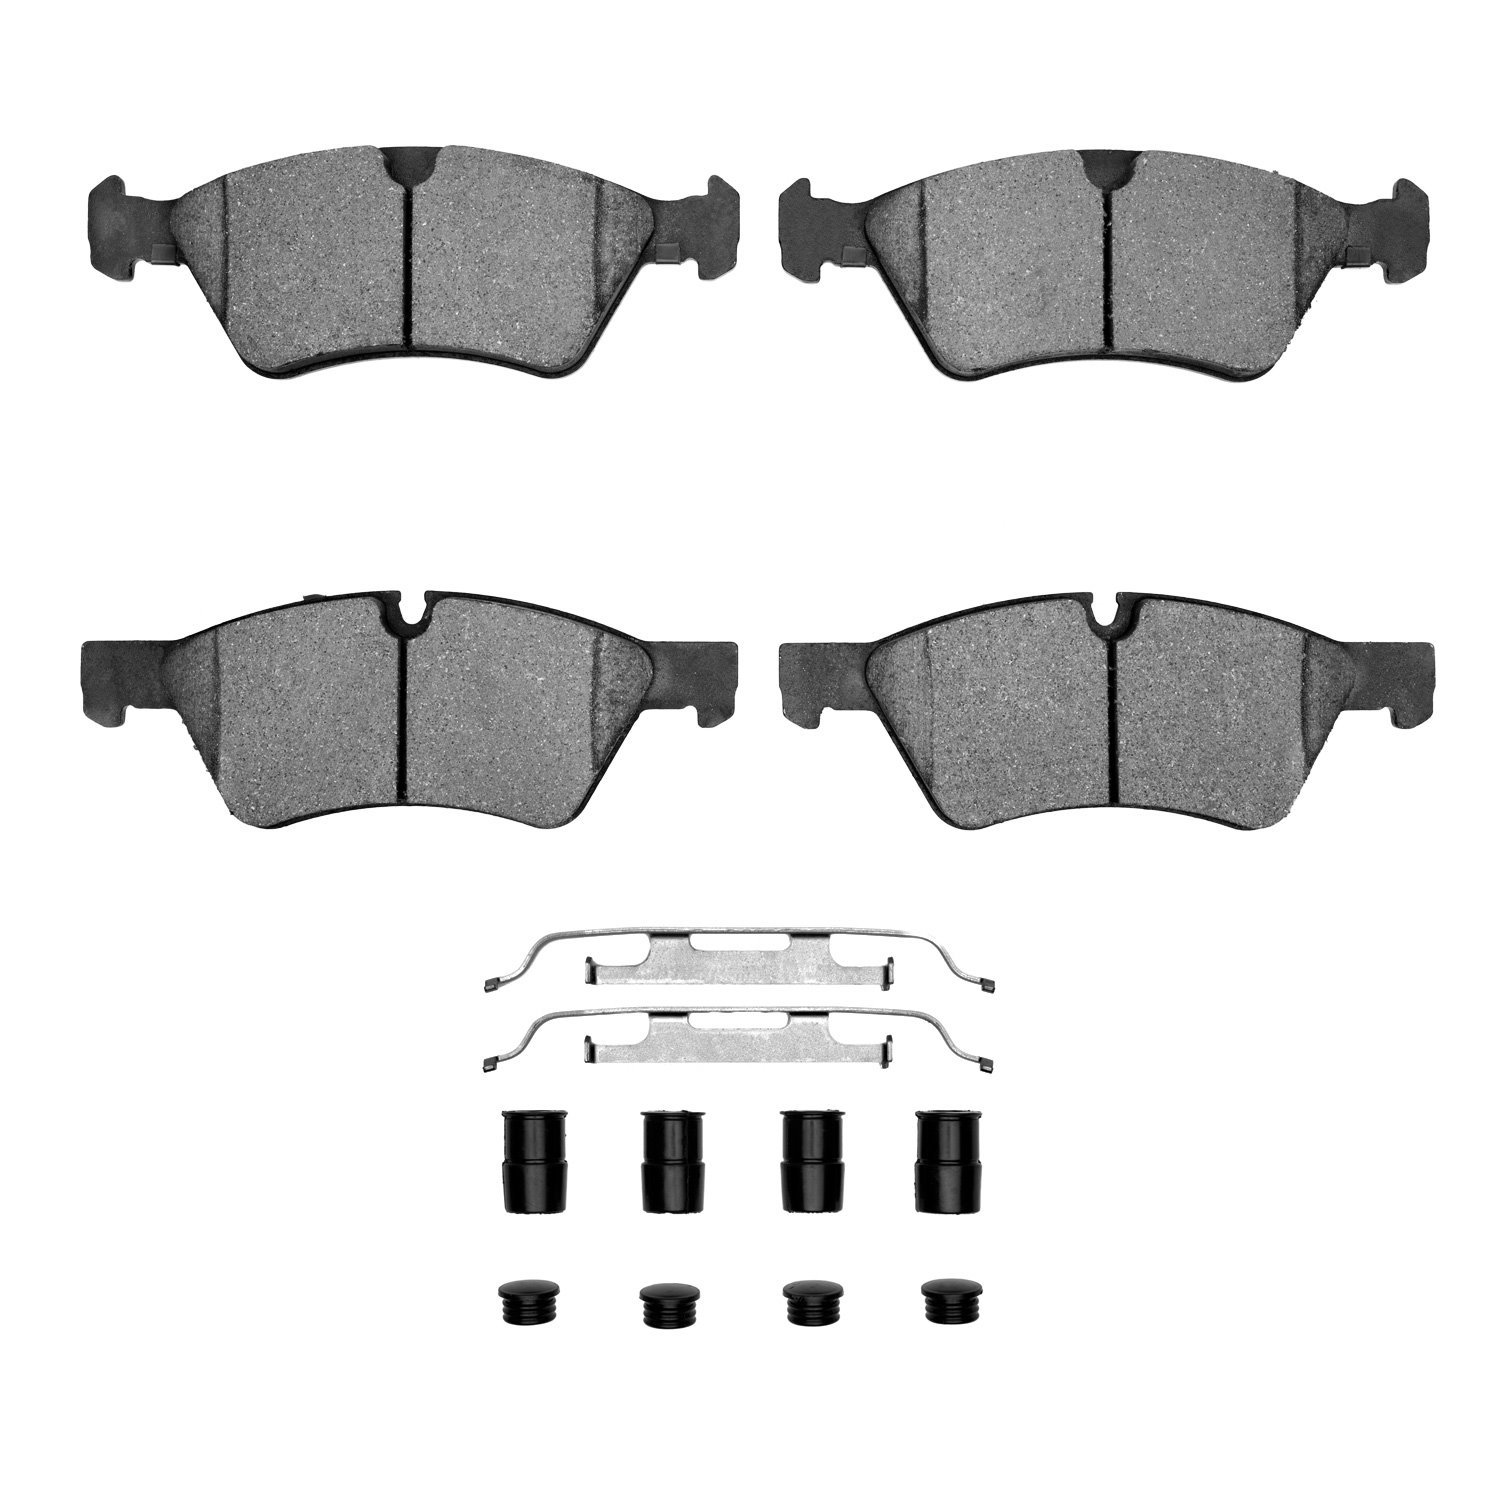 1310-1123-01 3000-Series Ceramic Brake Pads & Hardware Kit, 2005-2012 Mercedes-Benz, Position: Front